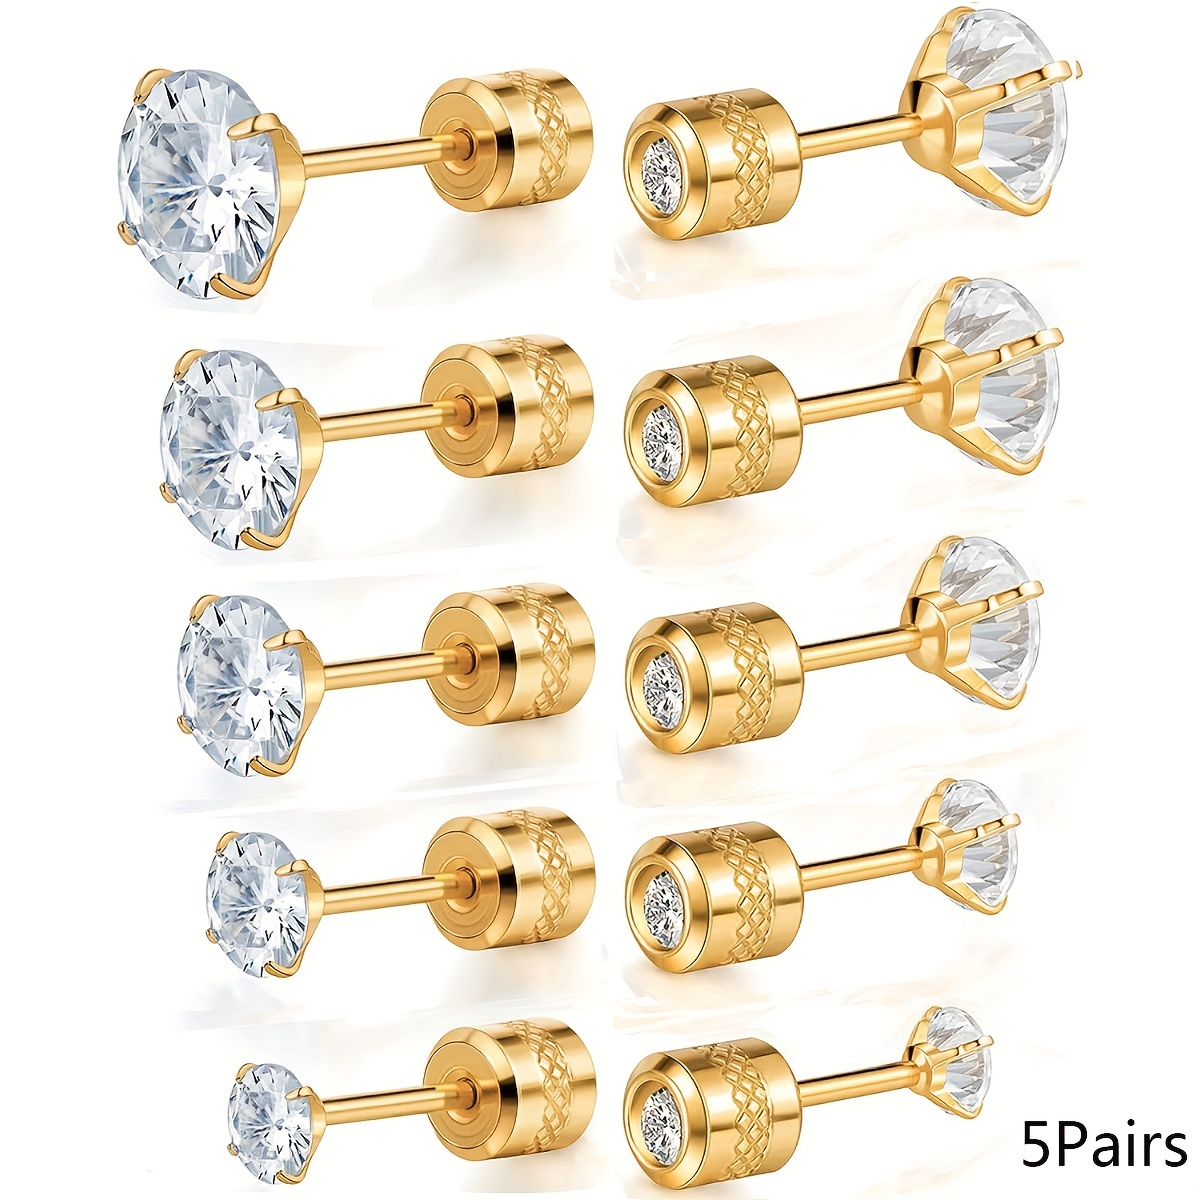 3 Pairs Brass Secure Screw on Earring Backs Replacement for Threaded Post  Diamond Earring Studs Screwbacks Locking Backs